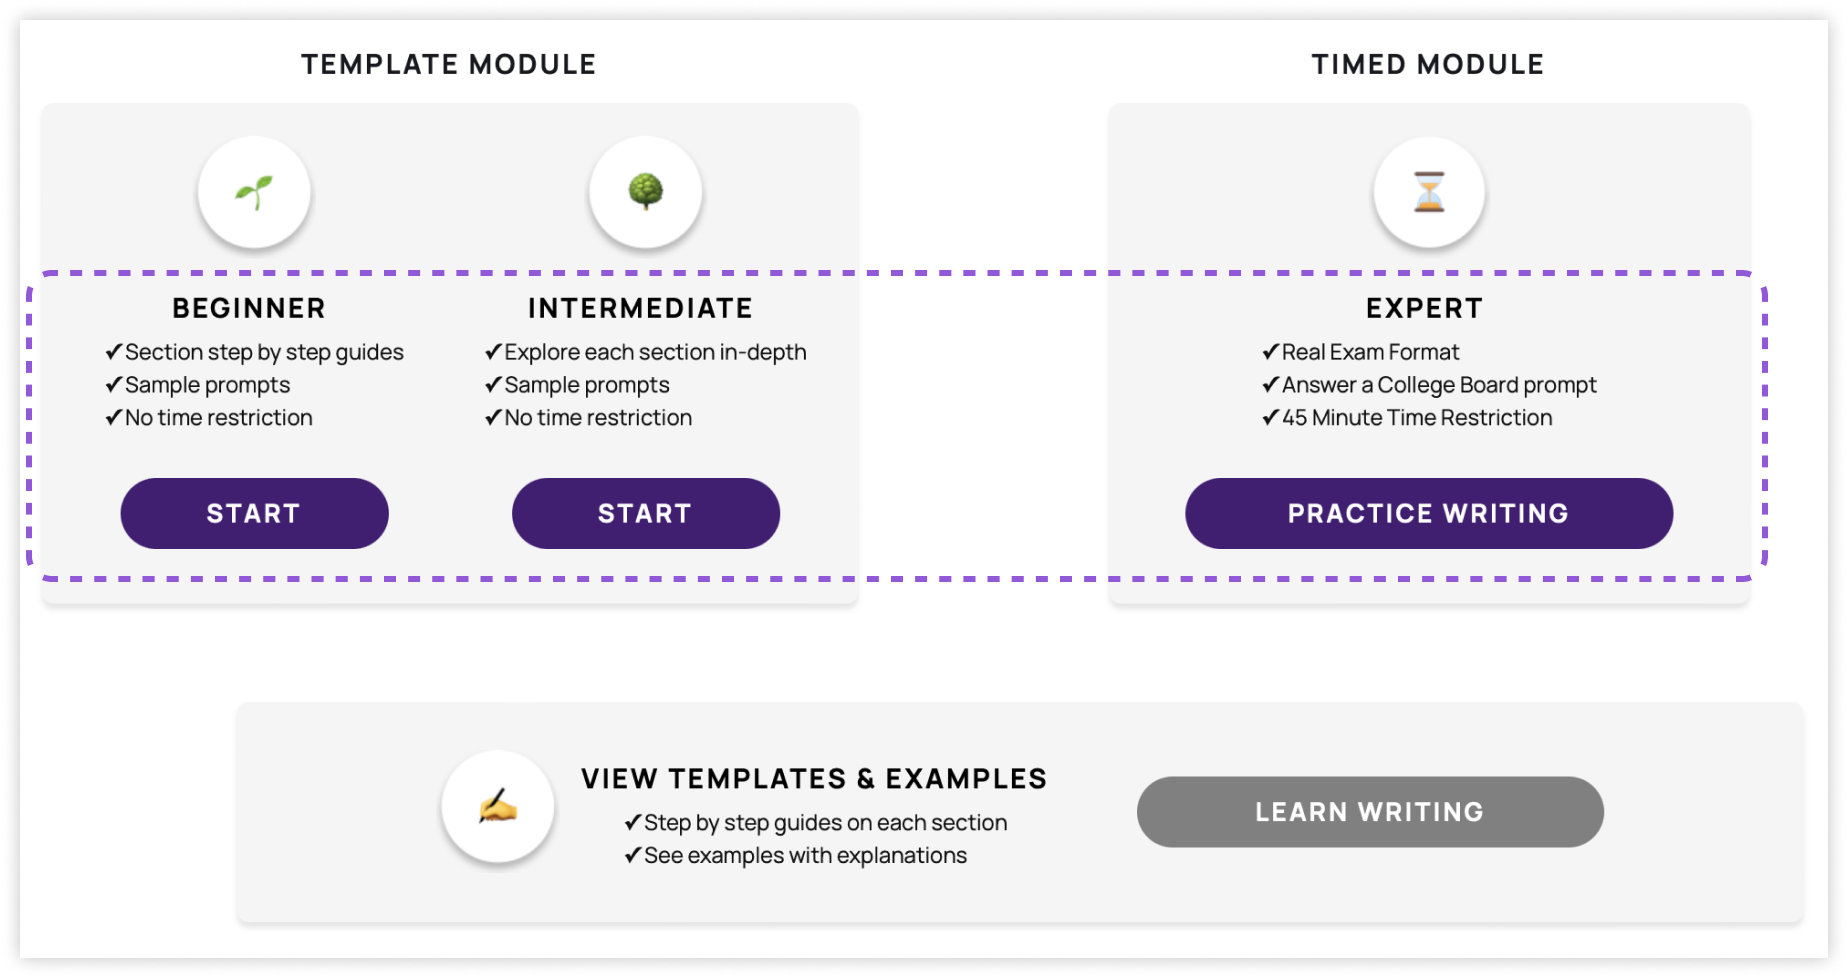 Engram has 3 module levels: beginner, intermediate, and expert